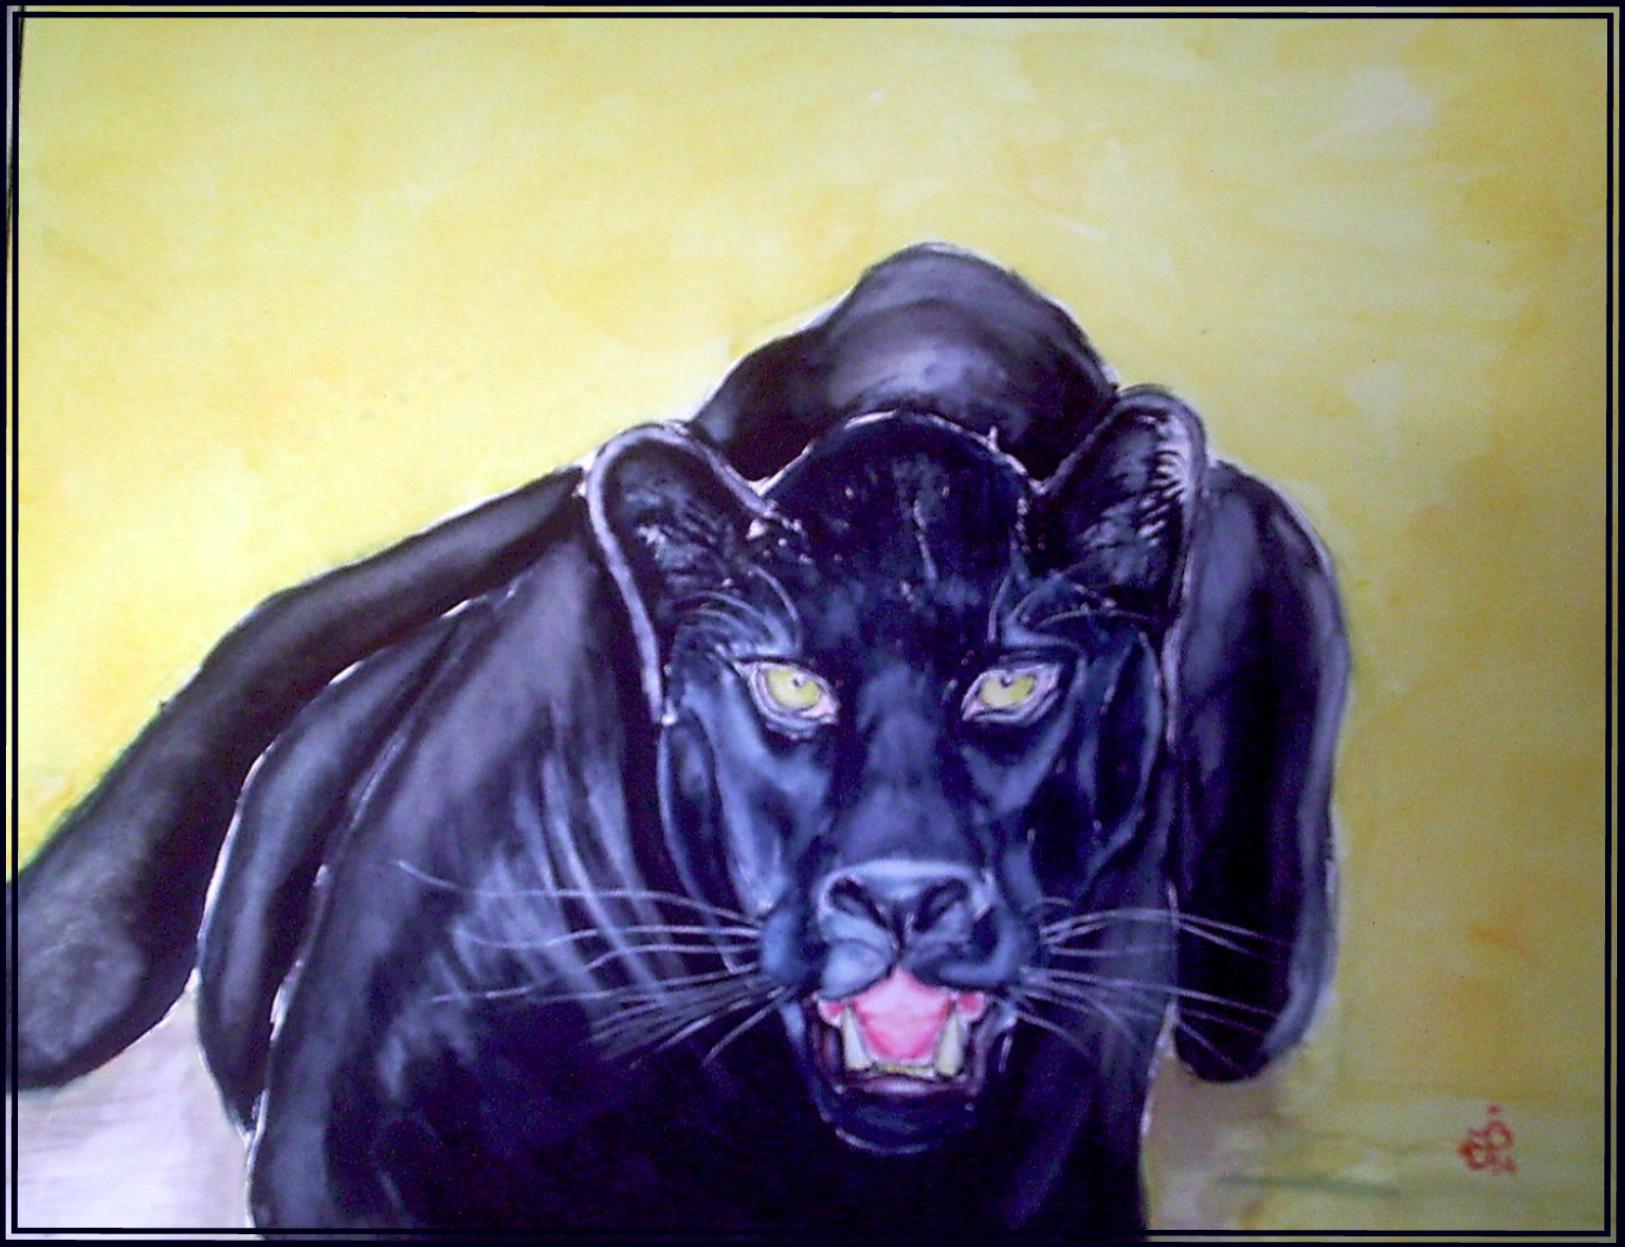 Panthere